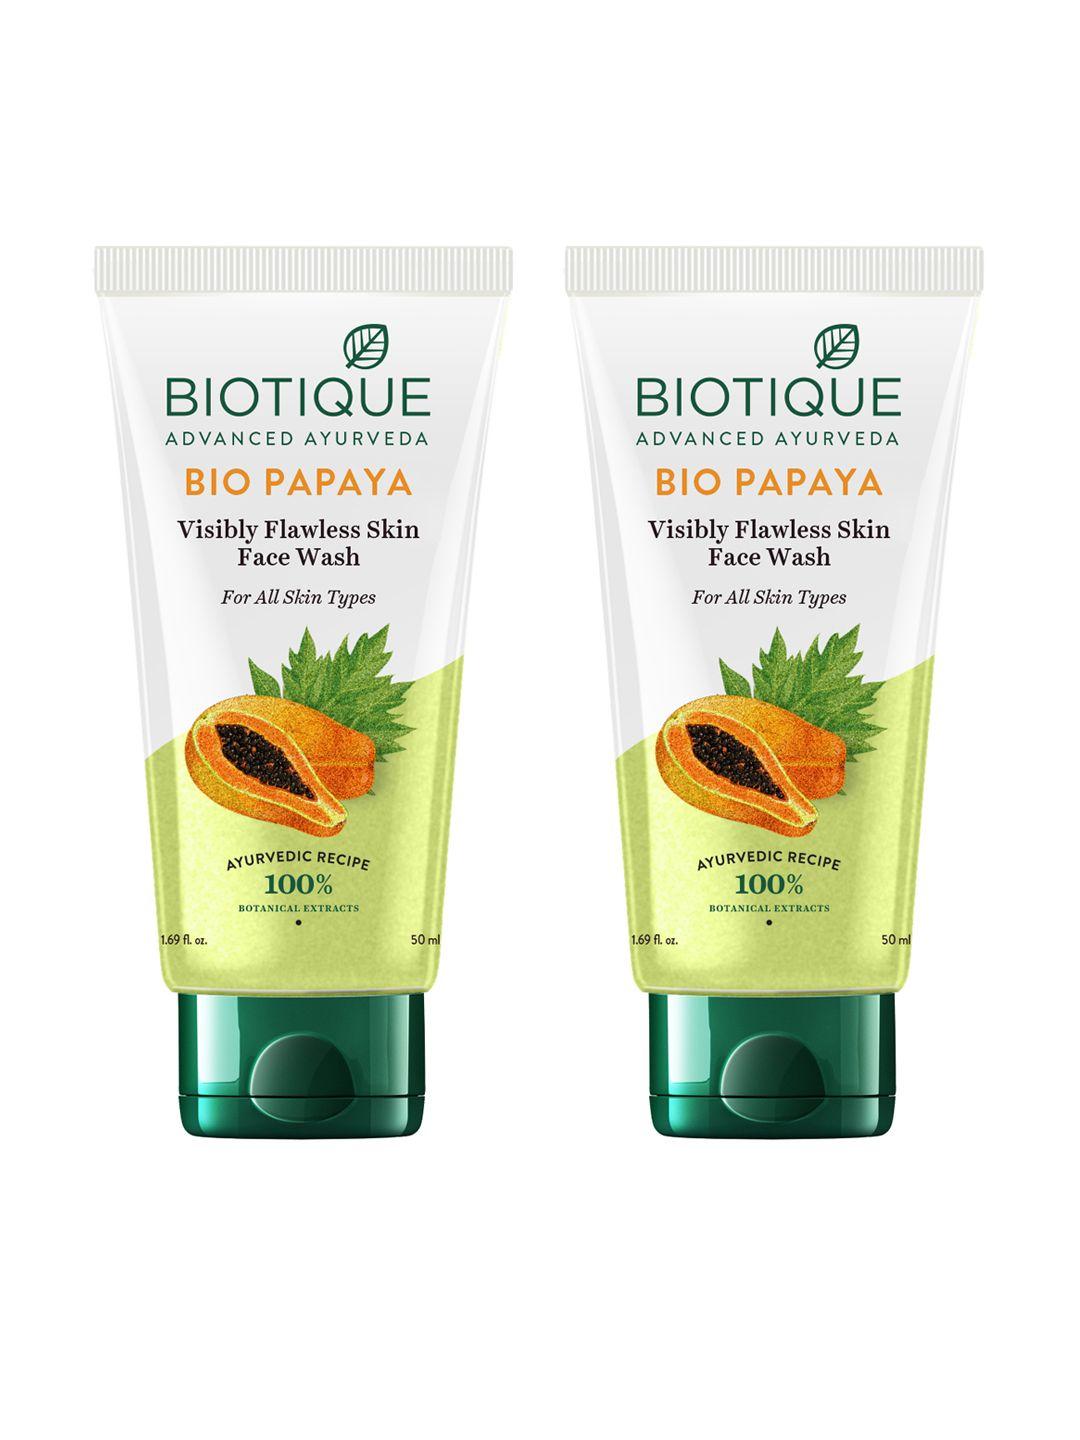 biotique advanced ayurveda set of 2 bio papaya visibly flawless skin face wash - 50ml each